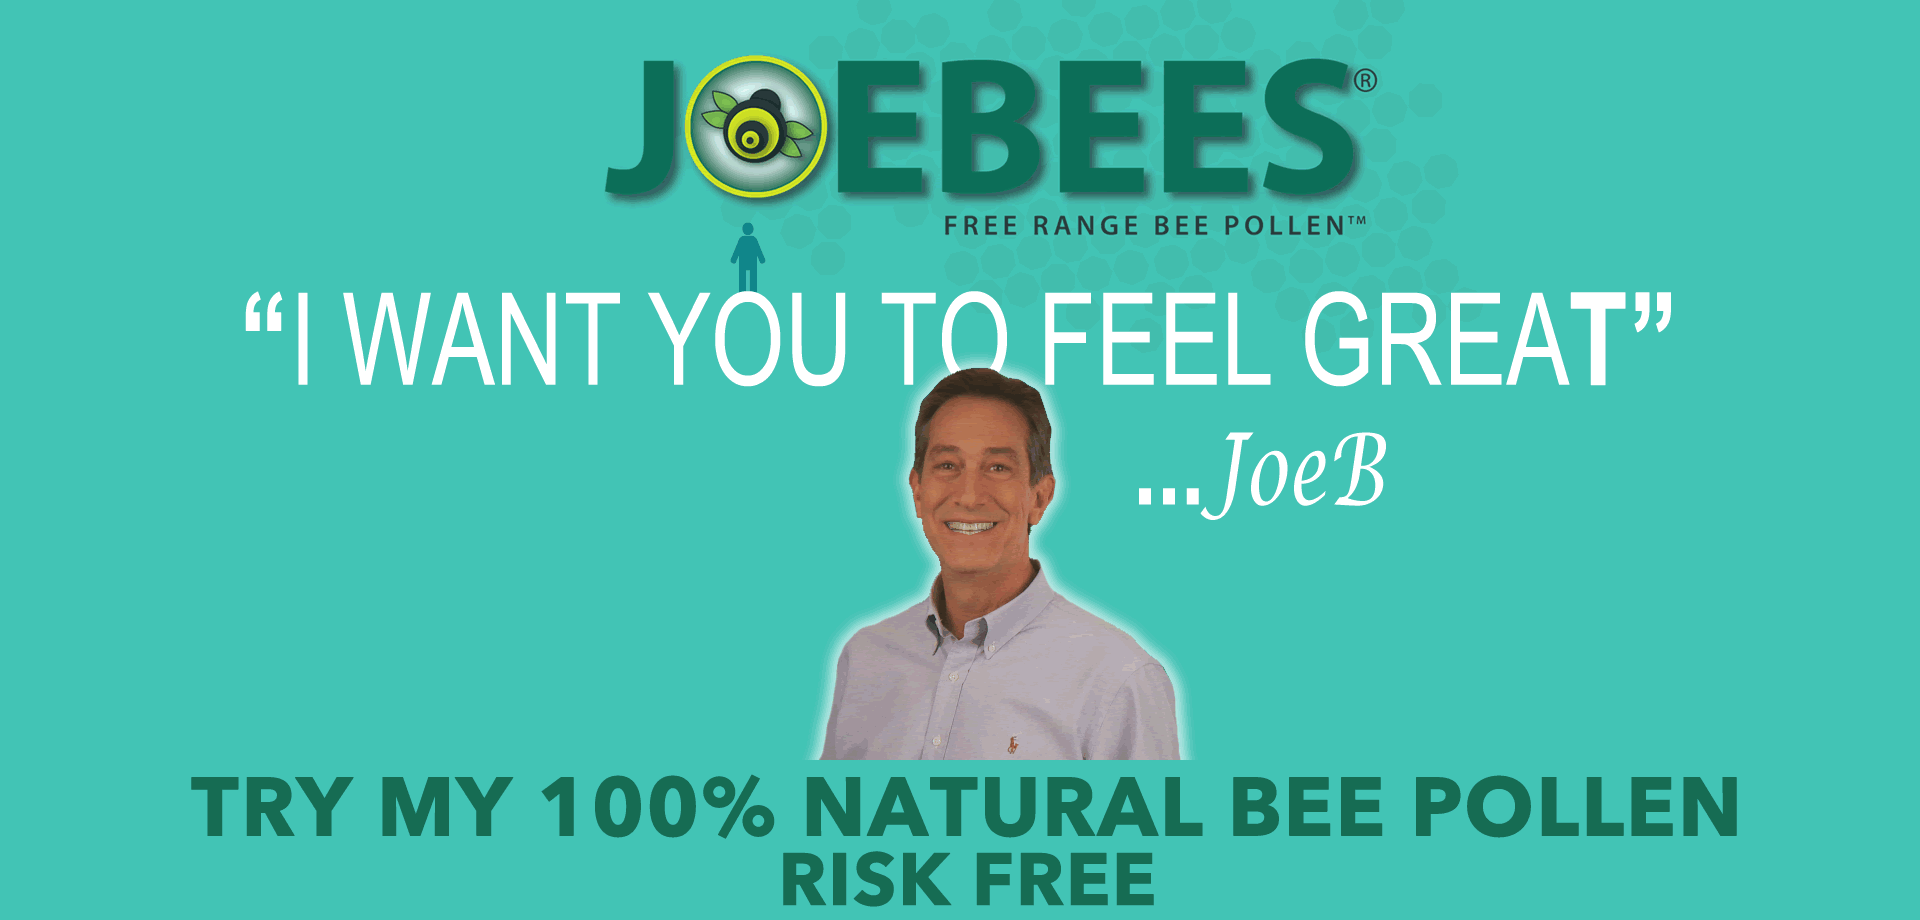 Joebees® bee pollen can help you look and feel great